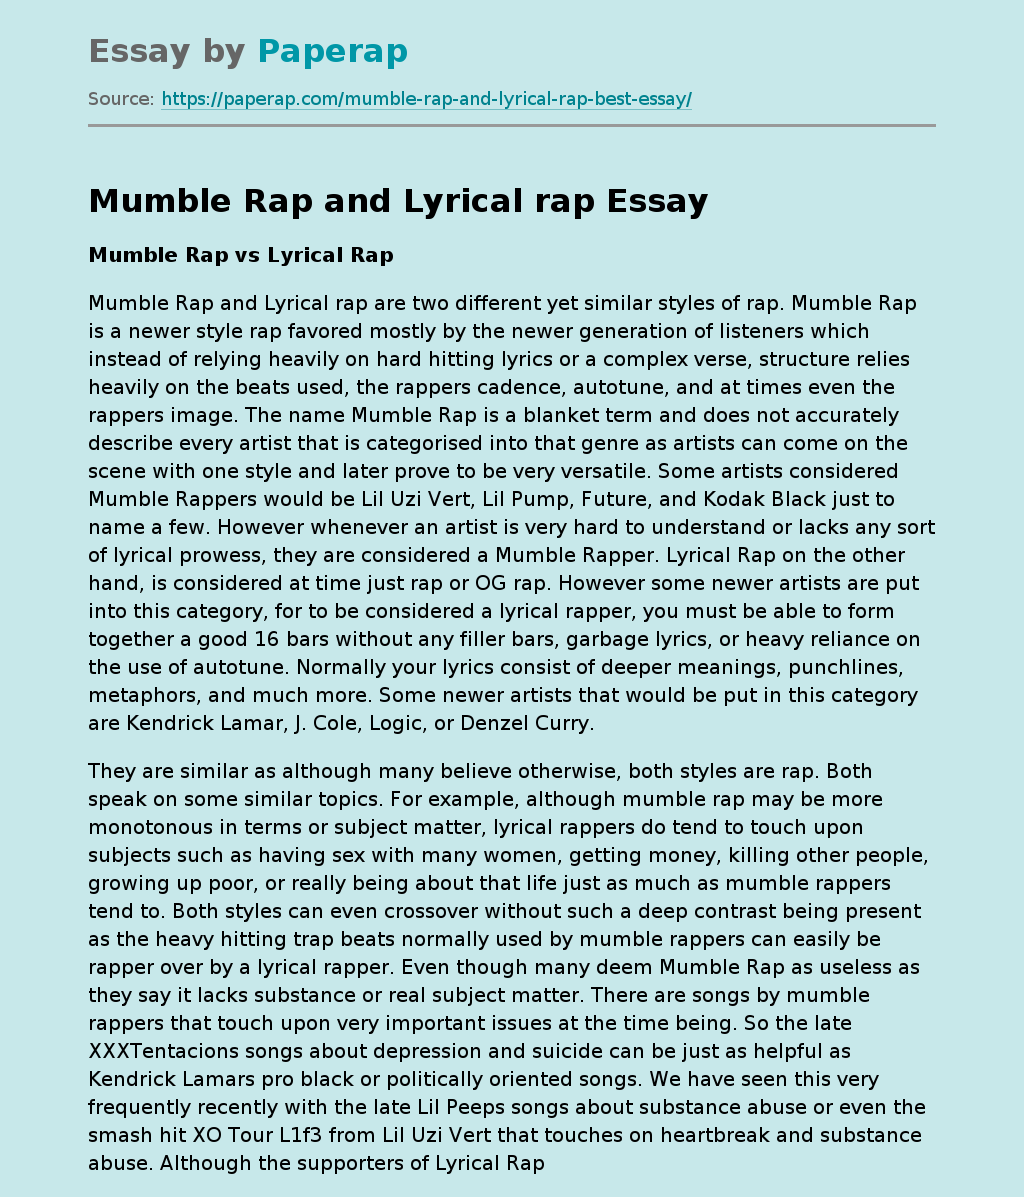 Mumble Rap and Lyrical rap